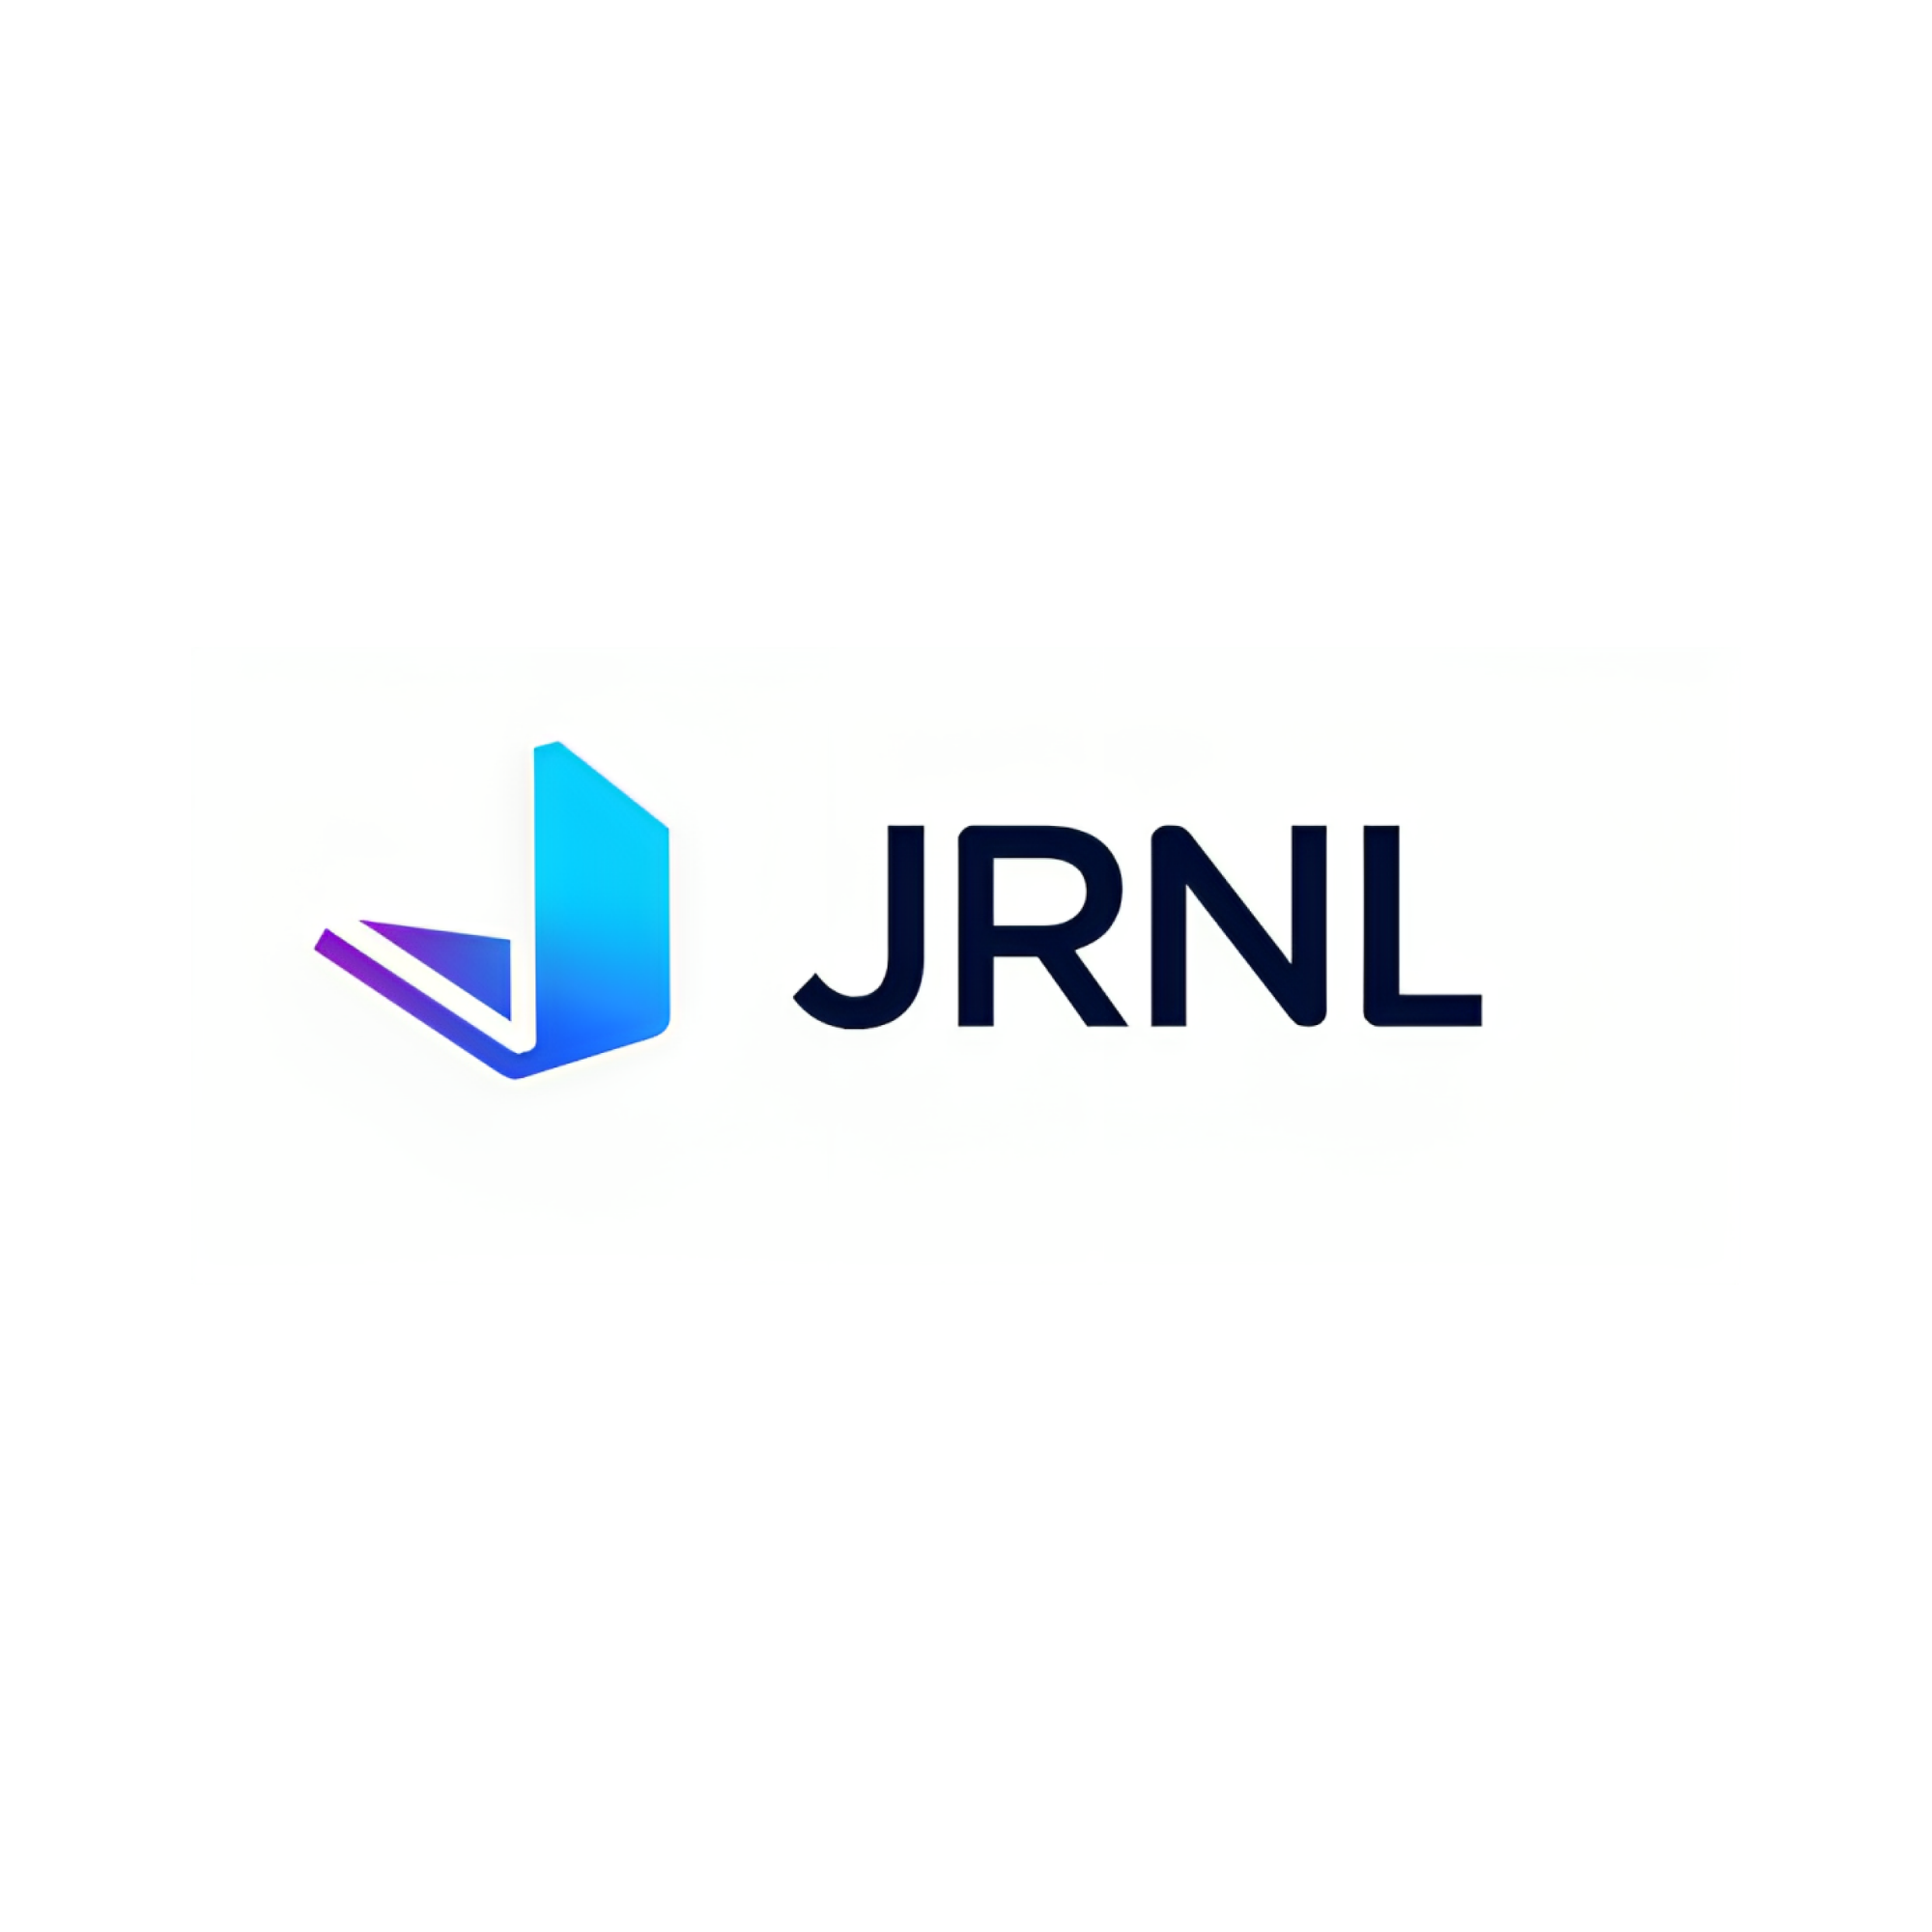 JRNL